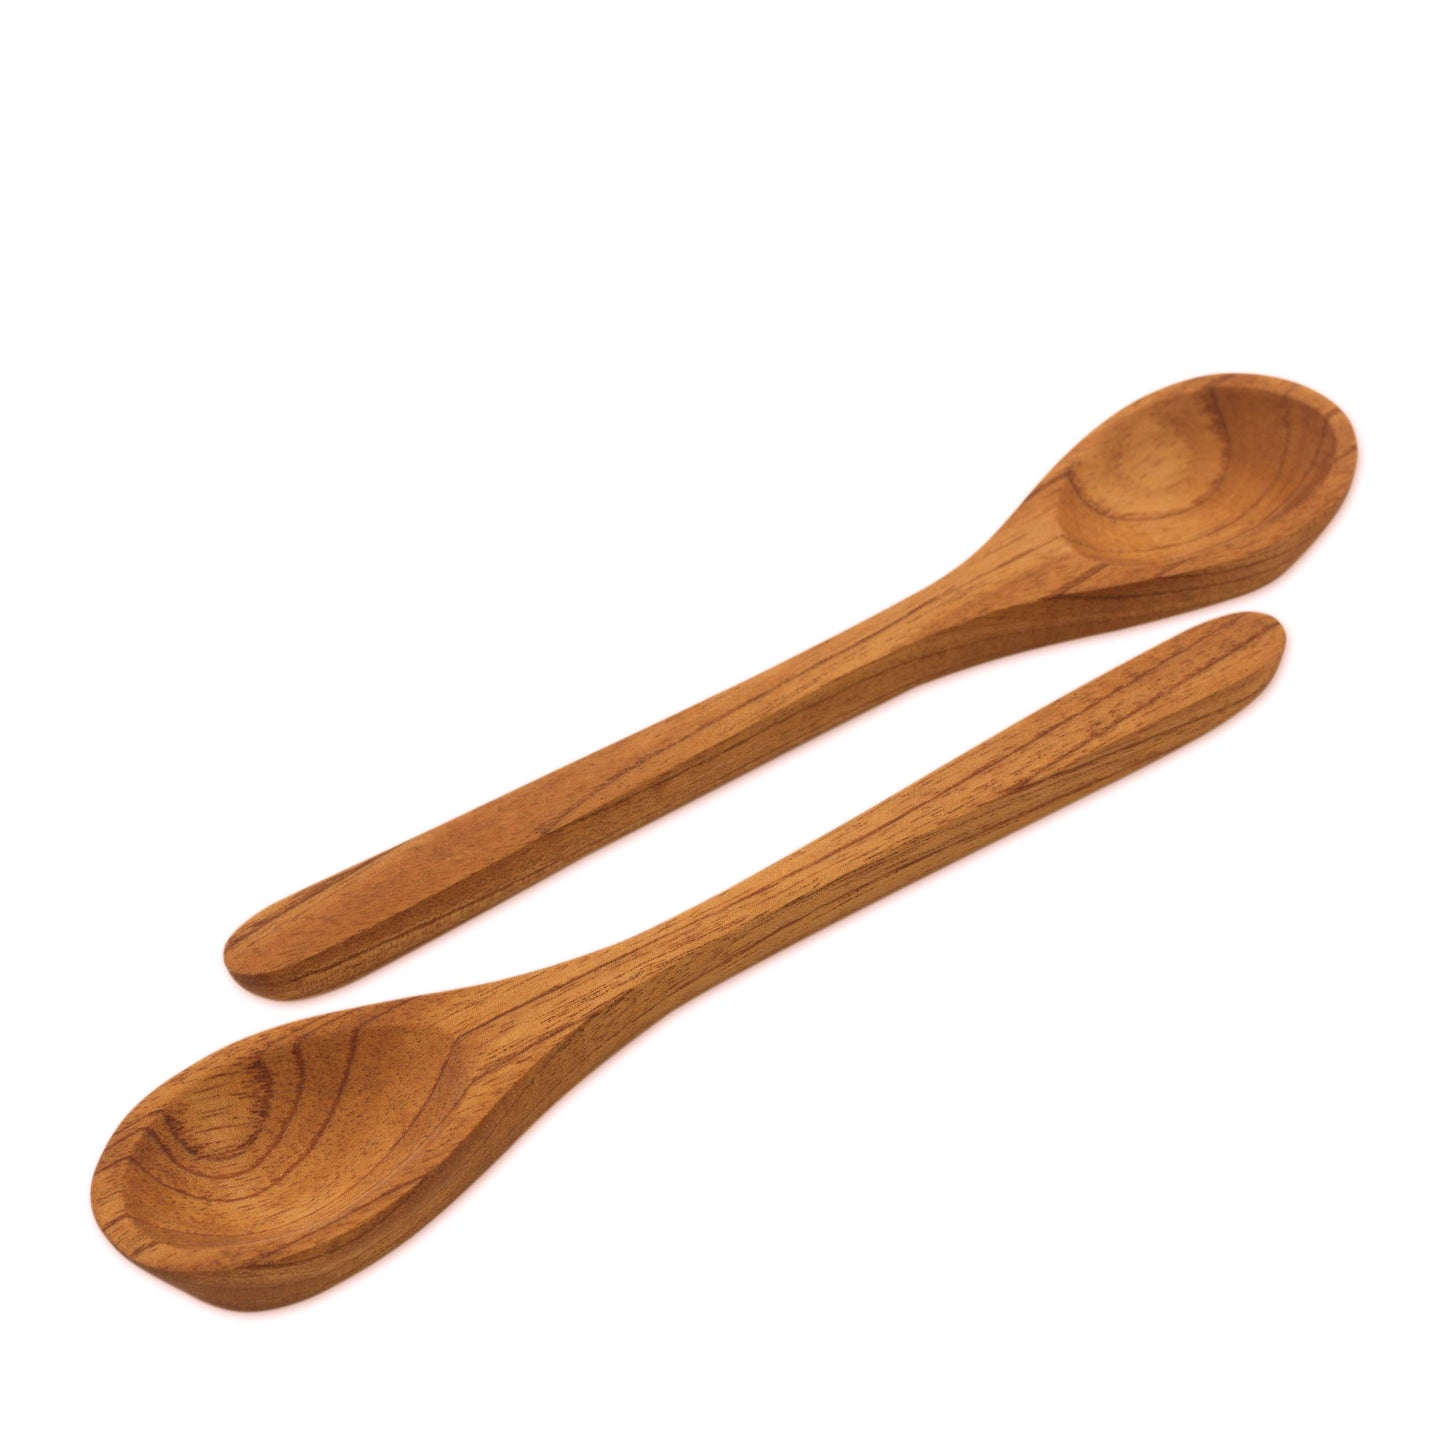 Natural Cuisine Cedar Wood Serving Spoons